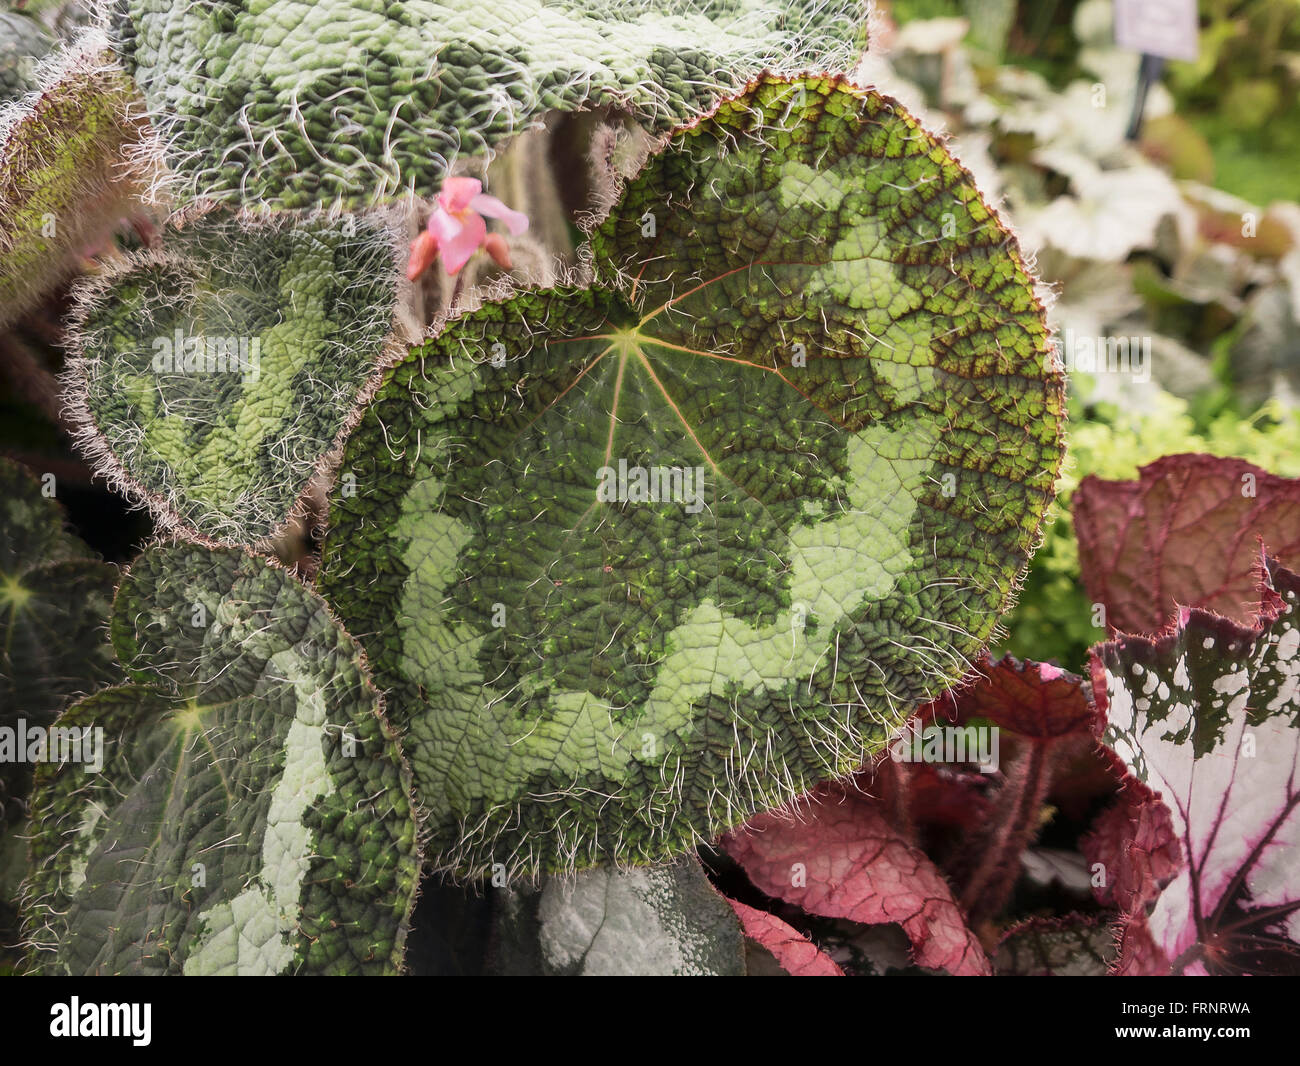 Hairy variegated leafed begonia species sizemoreae Stock Photo